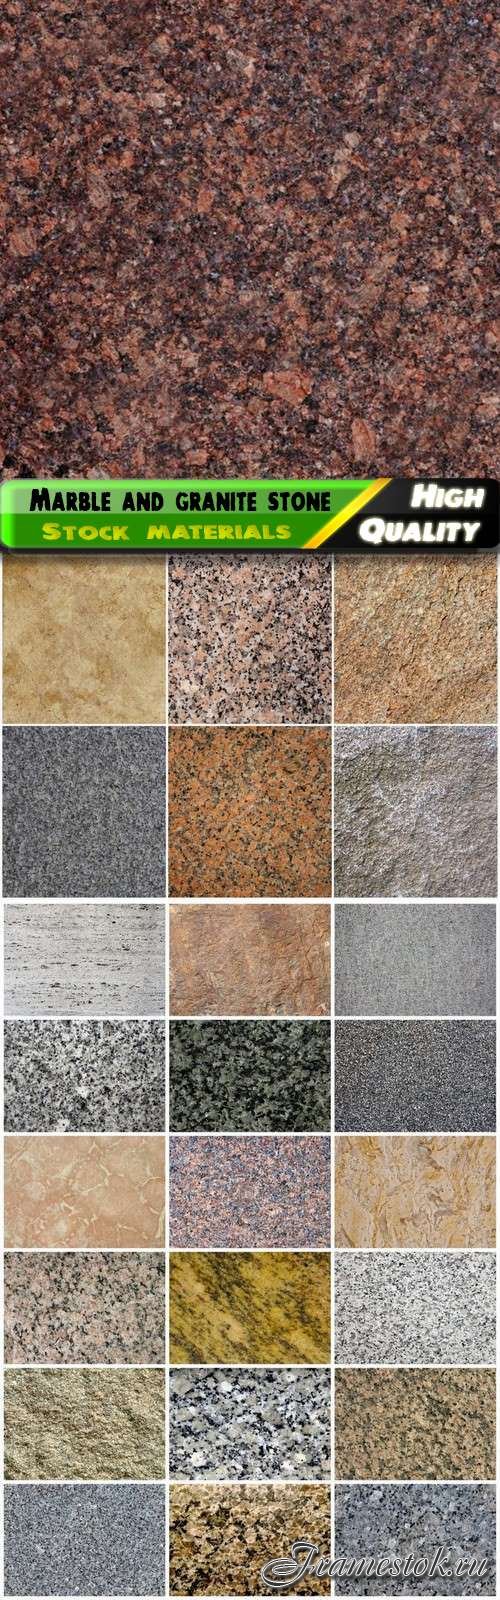 Marble and granite stone macro texture - 25 HQ Jpg